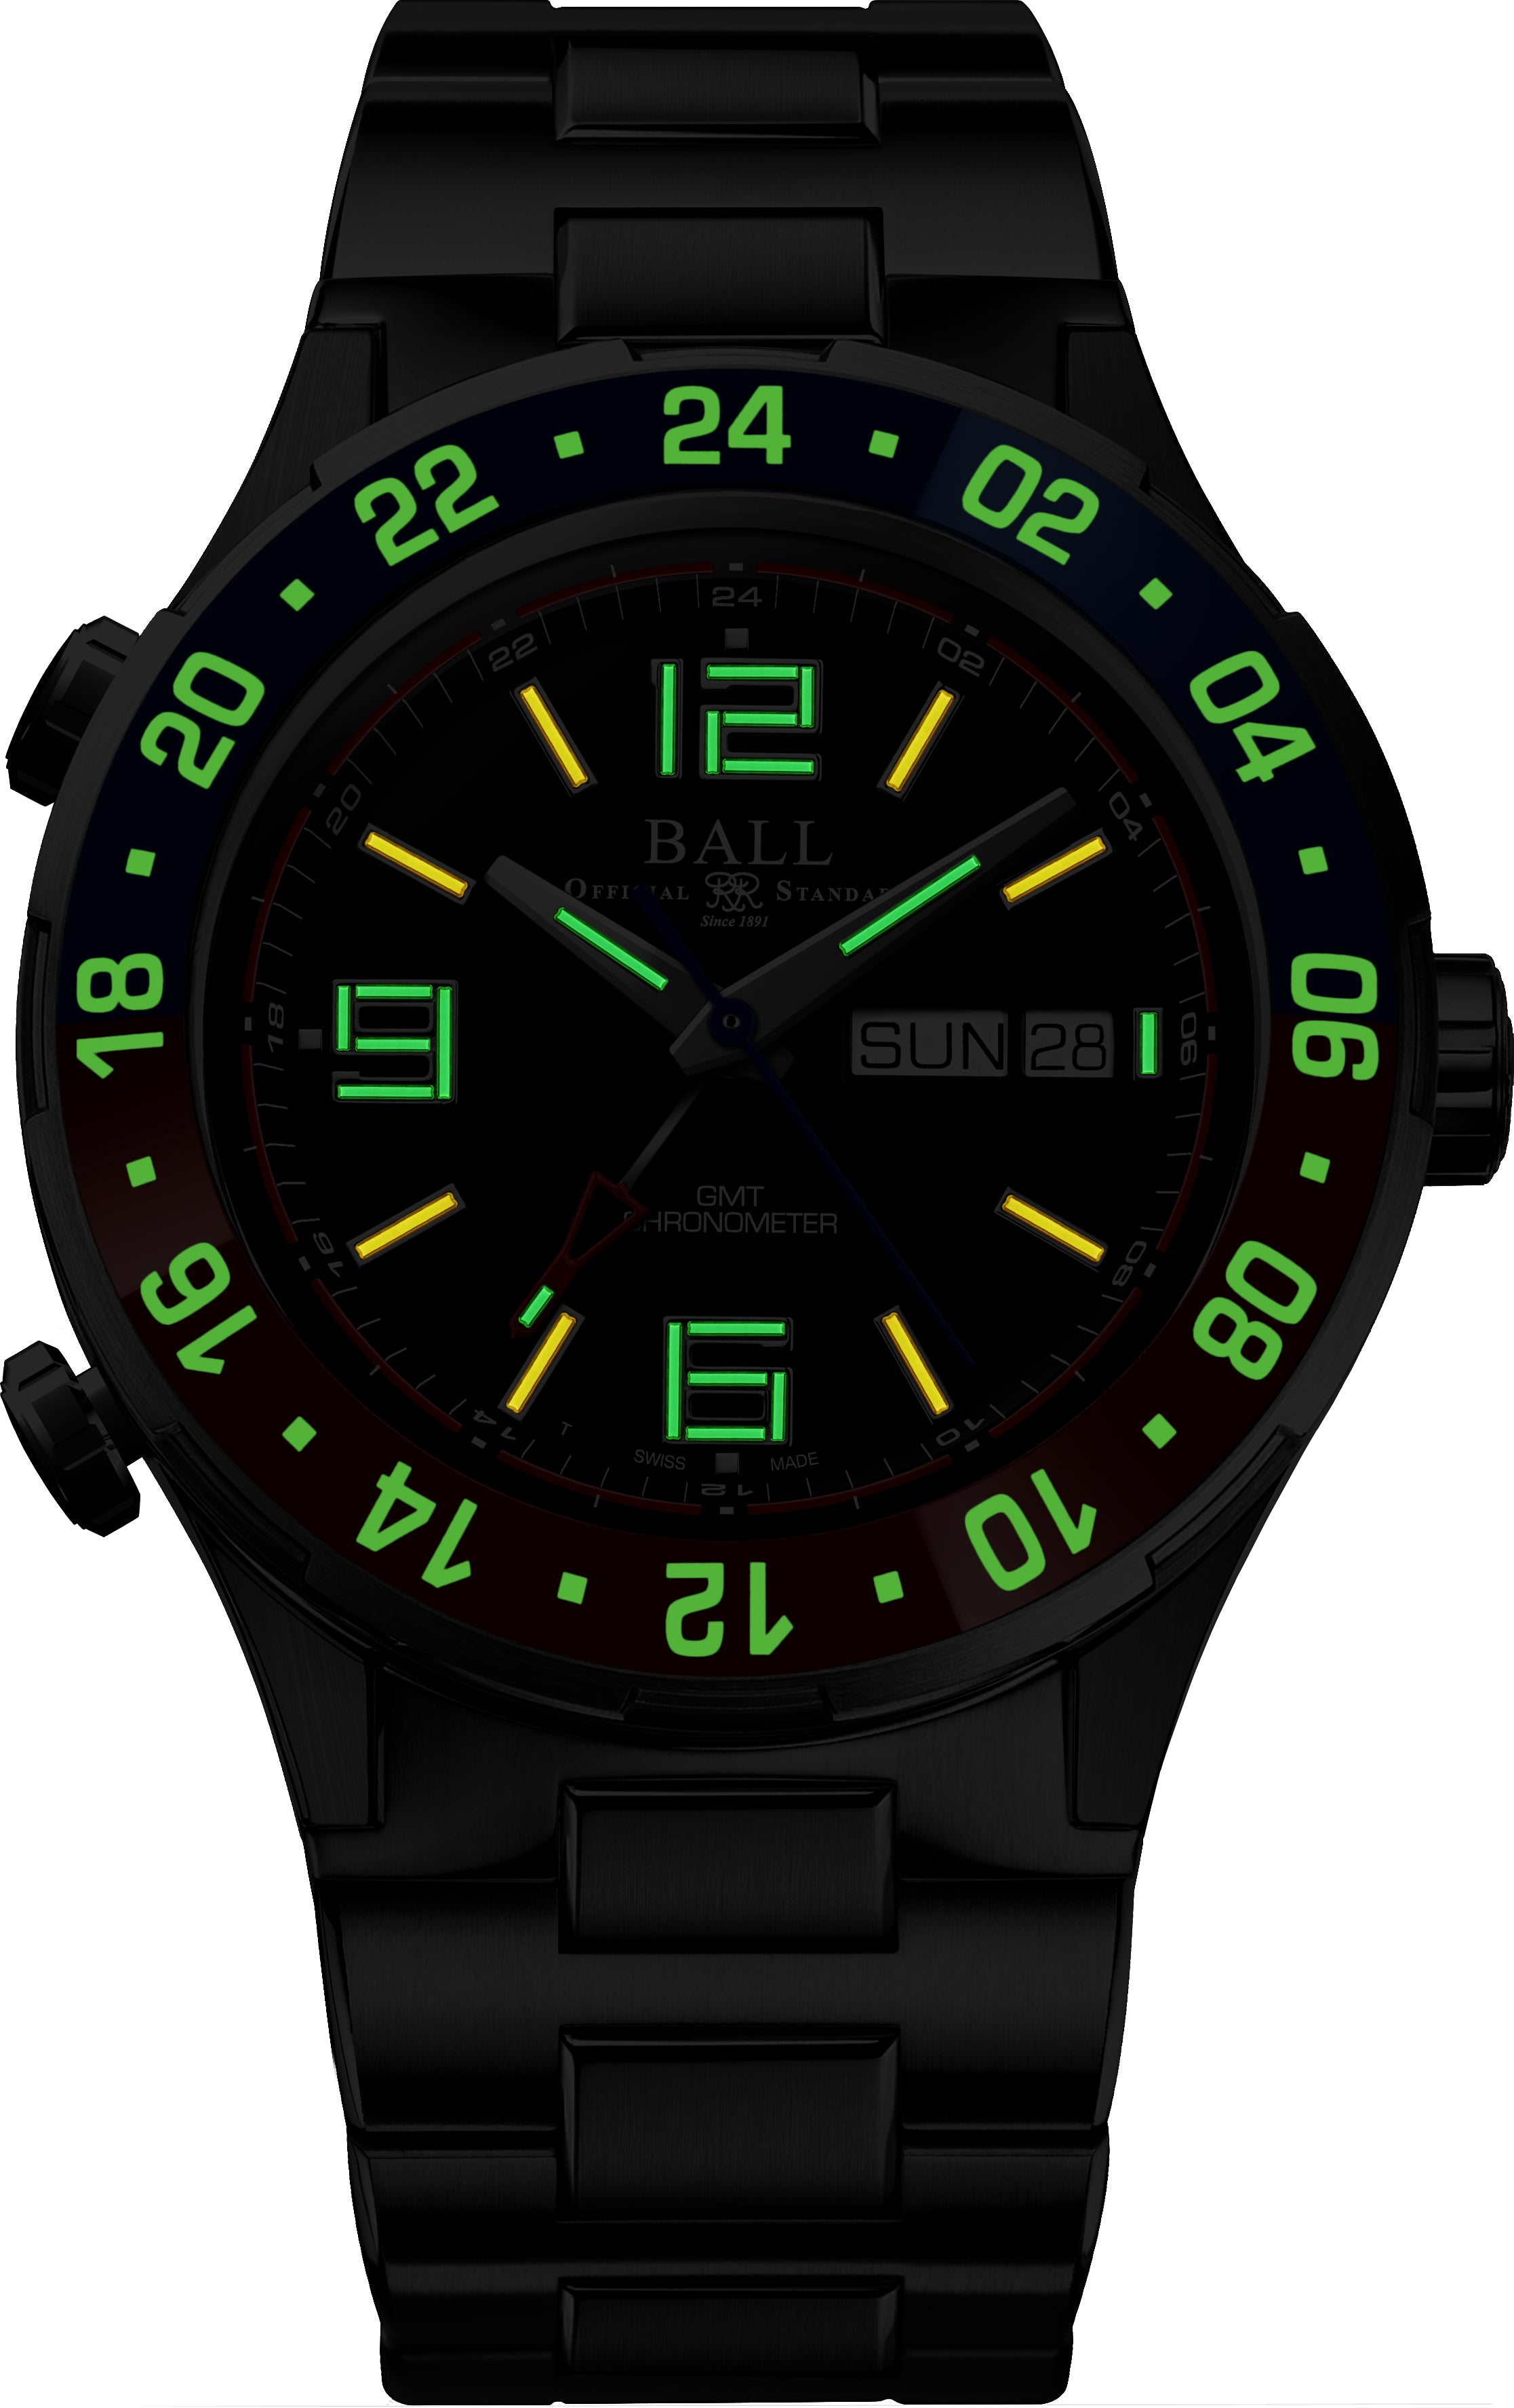 Mens Roadmaster Marine Pepsi Bezel GMT Ball Watch